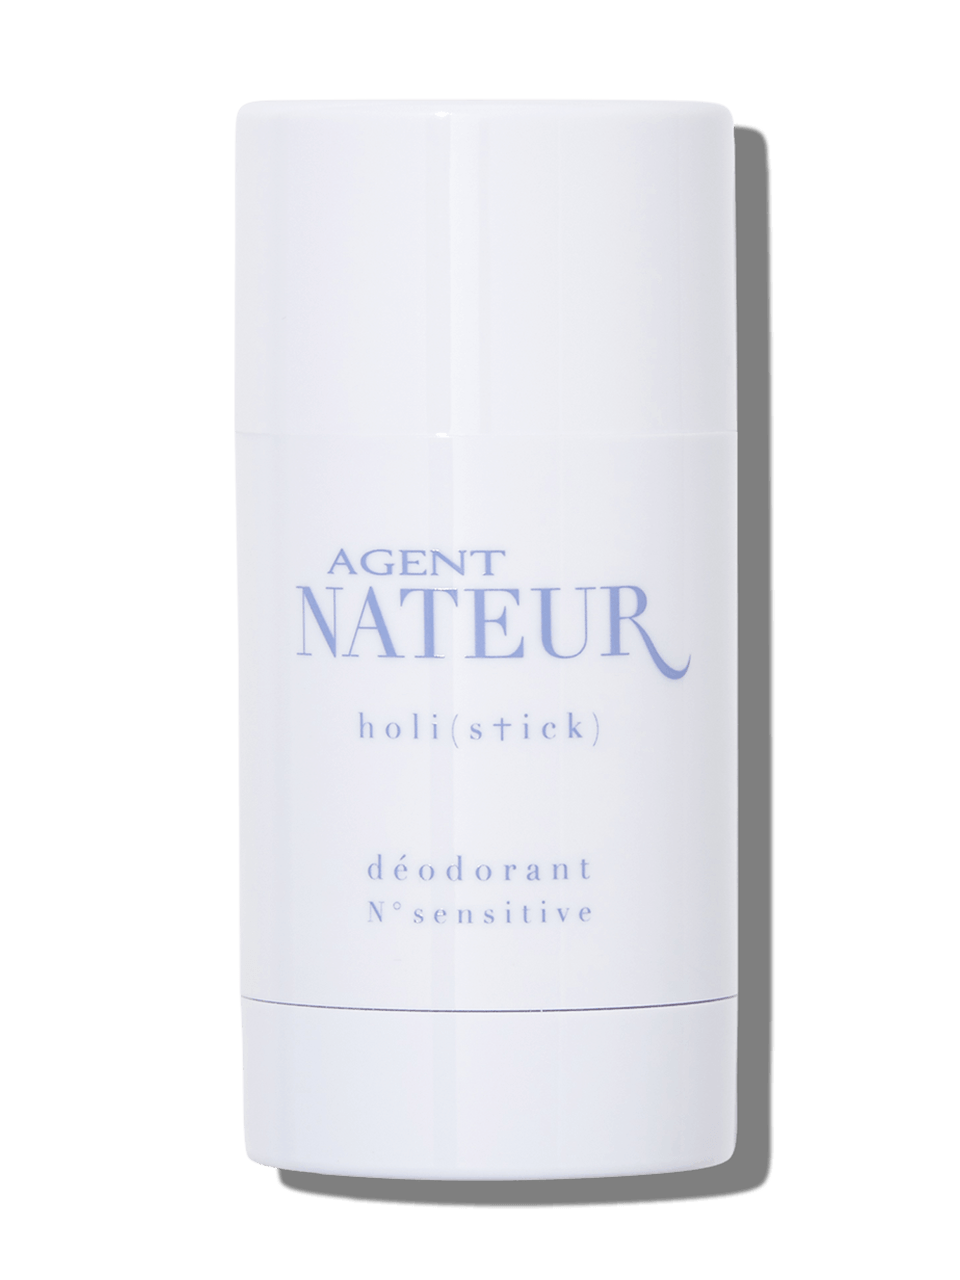 holi (stick) sensitive deodorant BODY CARE Agent Nateur 